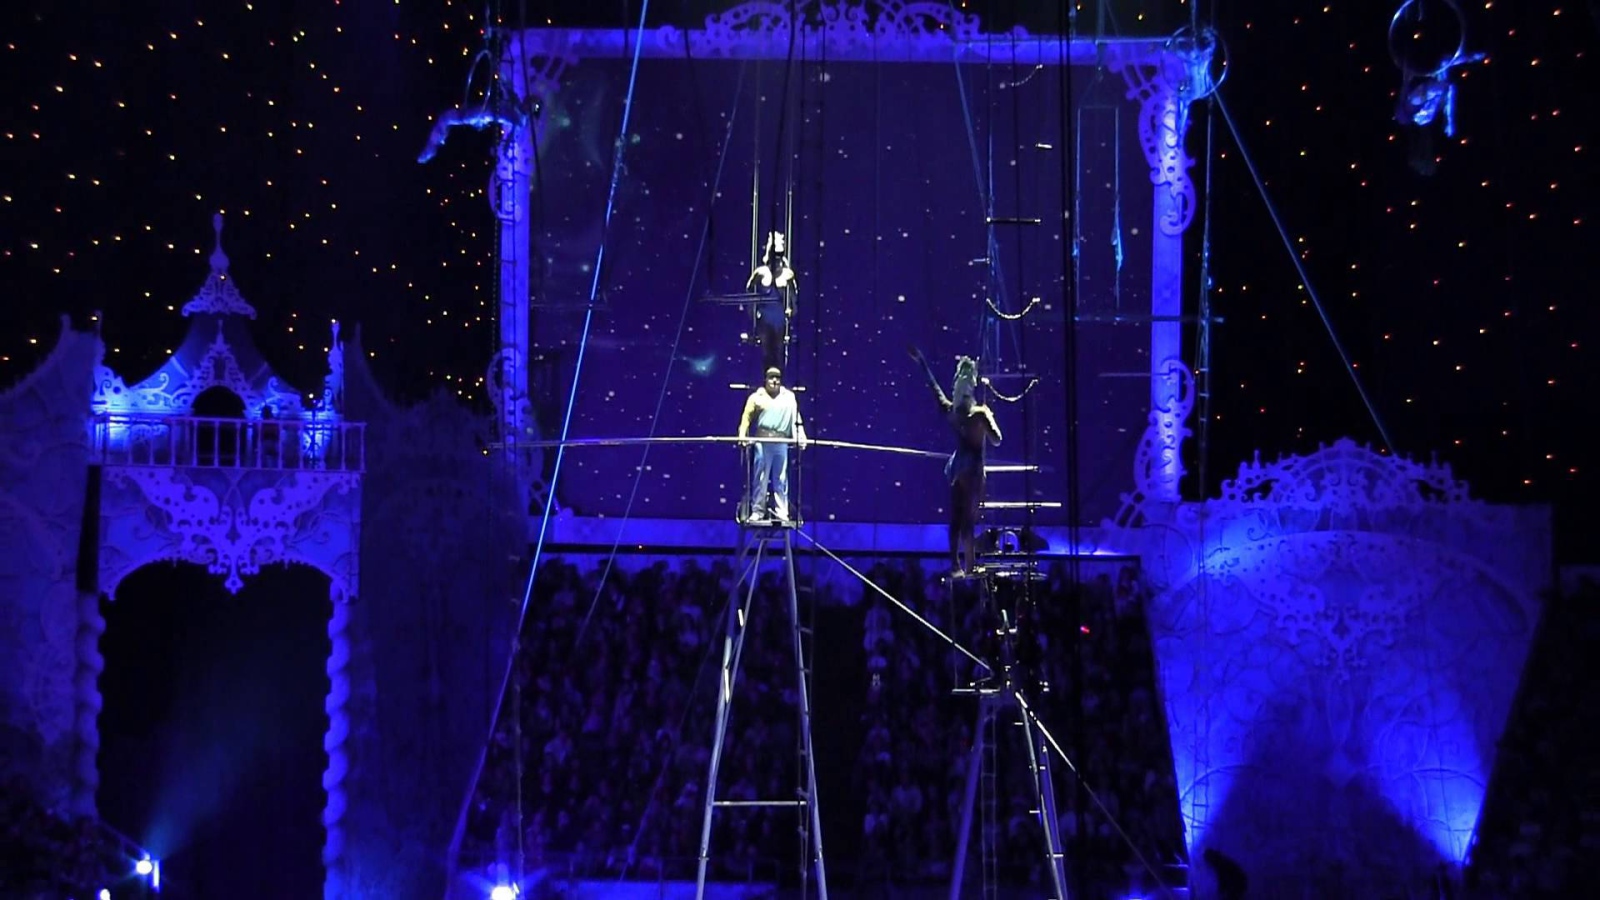 Цирк деда мороза в олимпийском